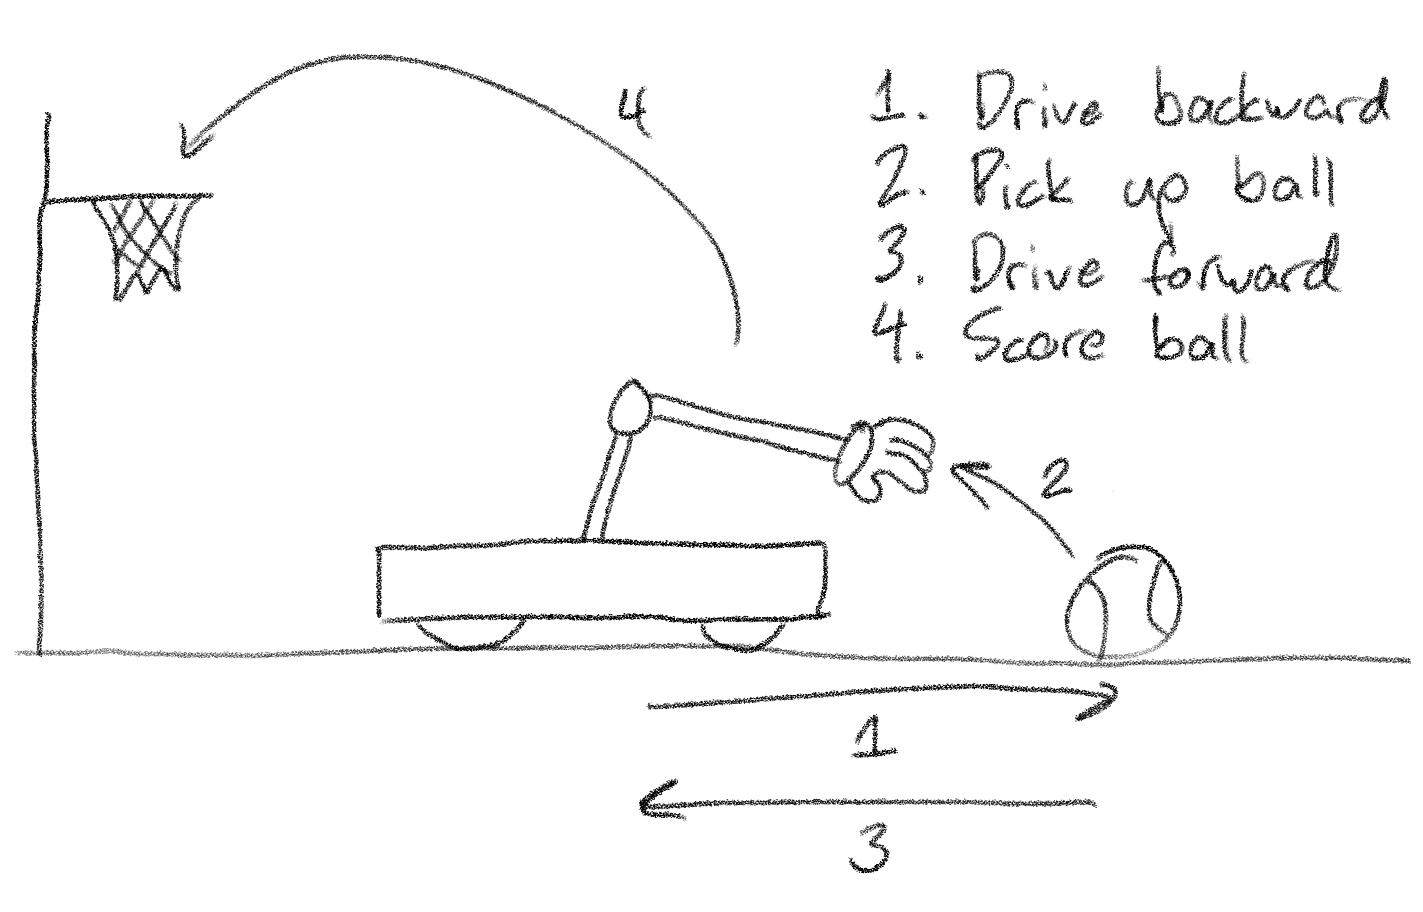 A diagram of a four-step autonomous routine: drive backward, pick up ball, drive forward, score ball.